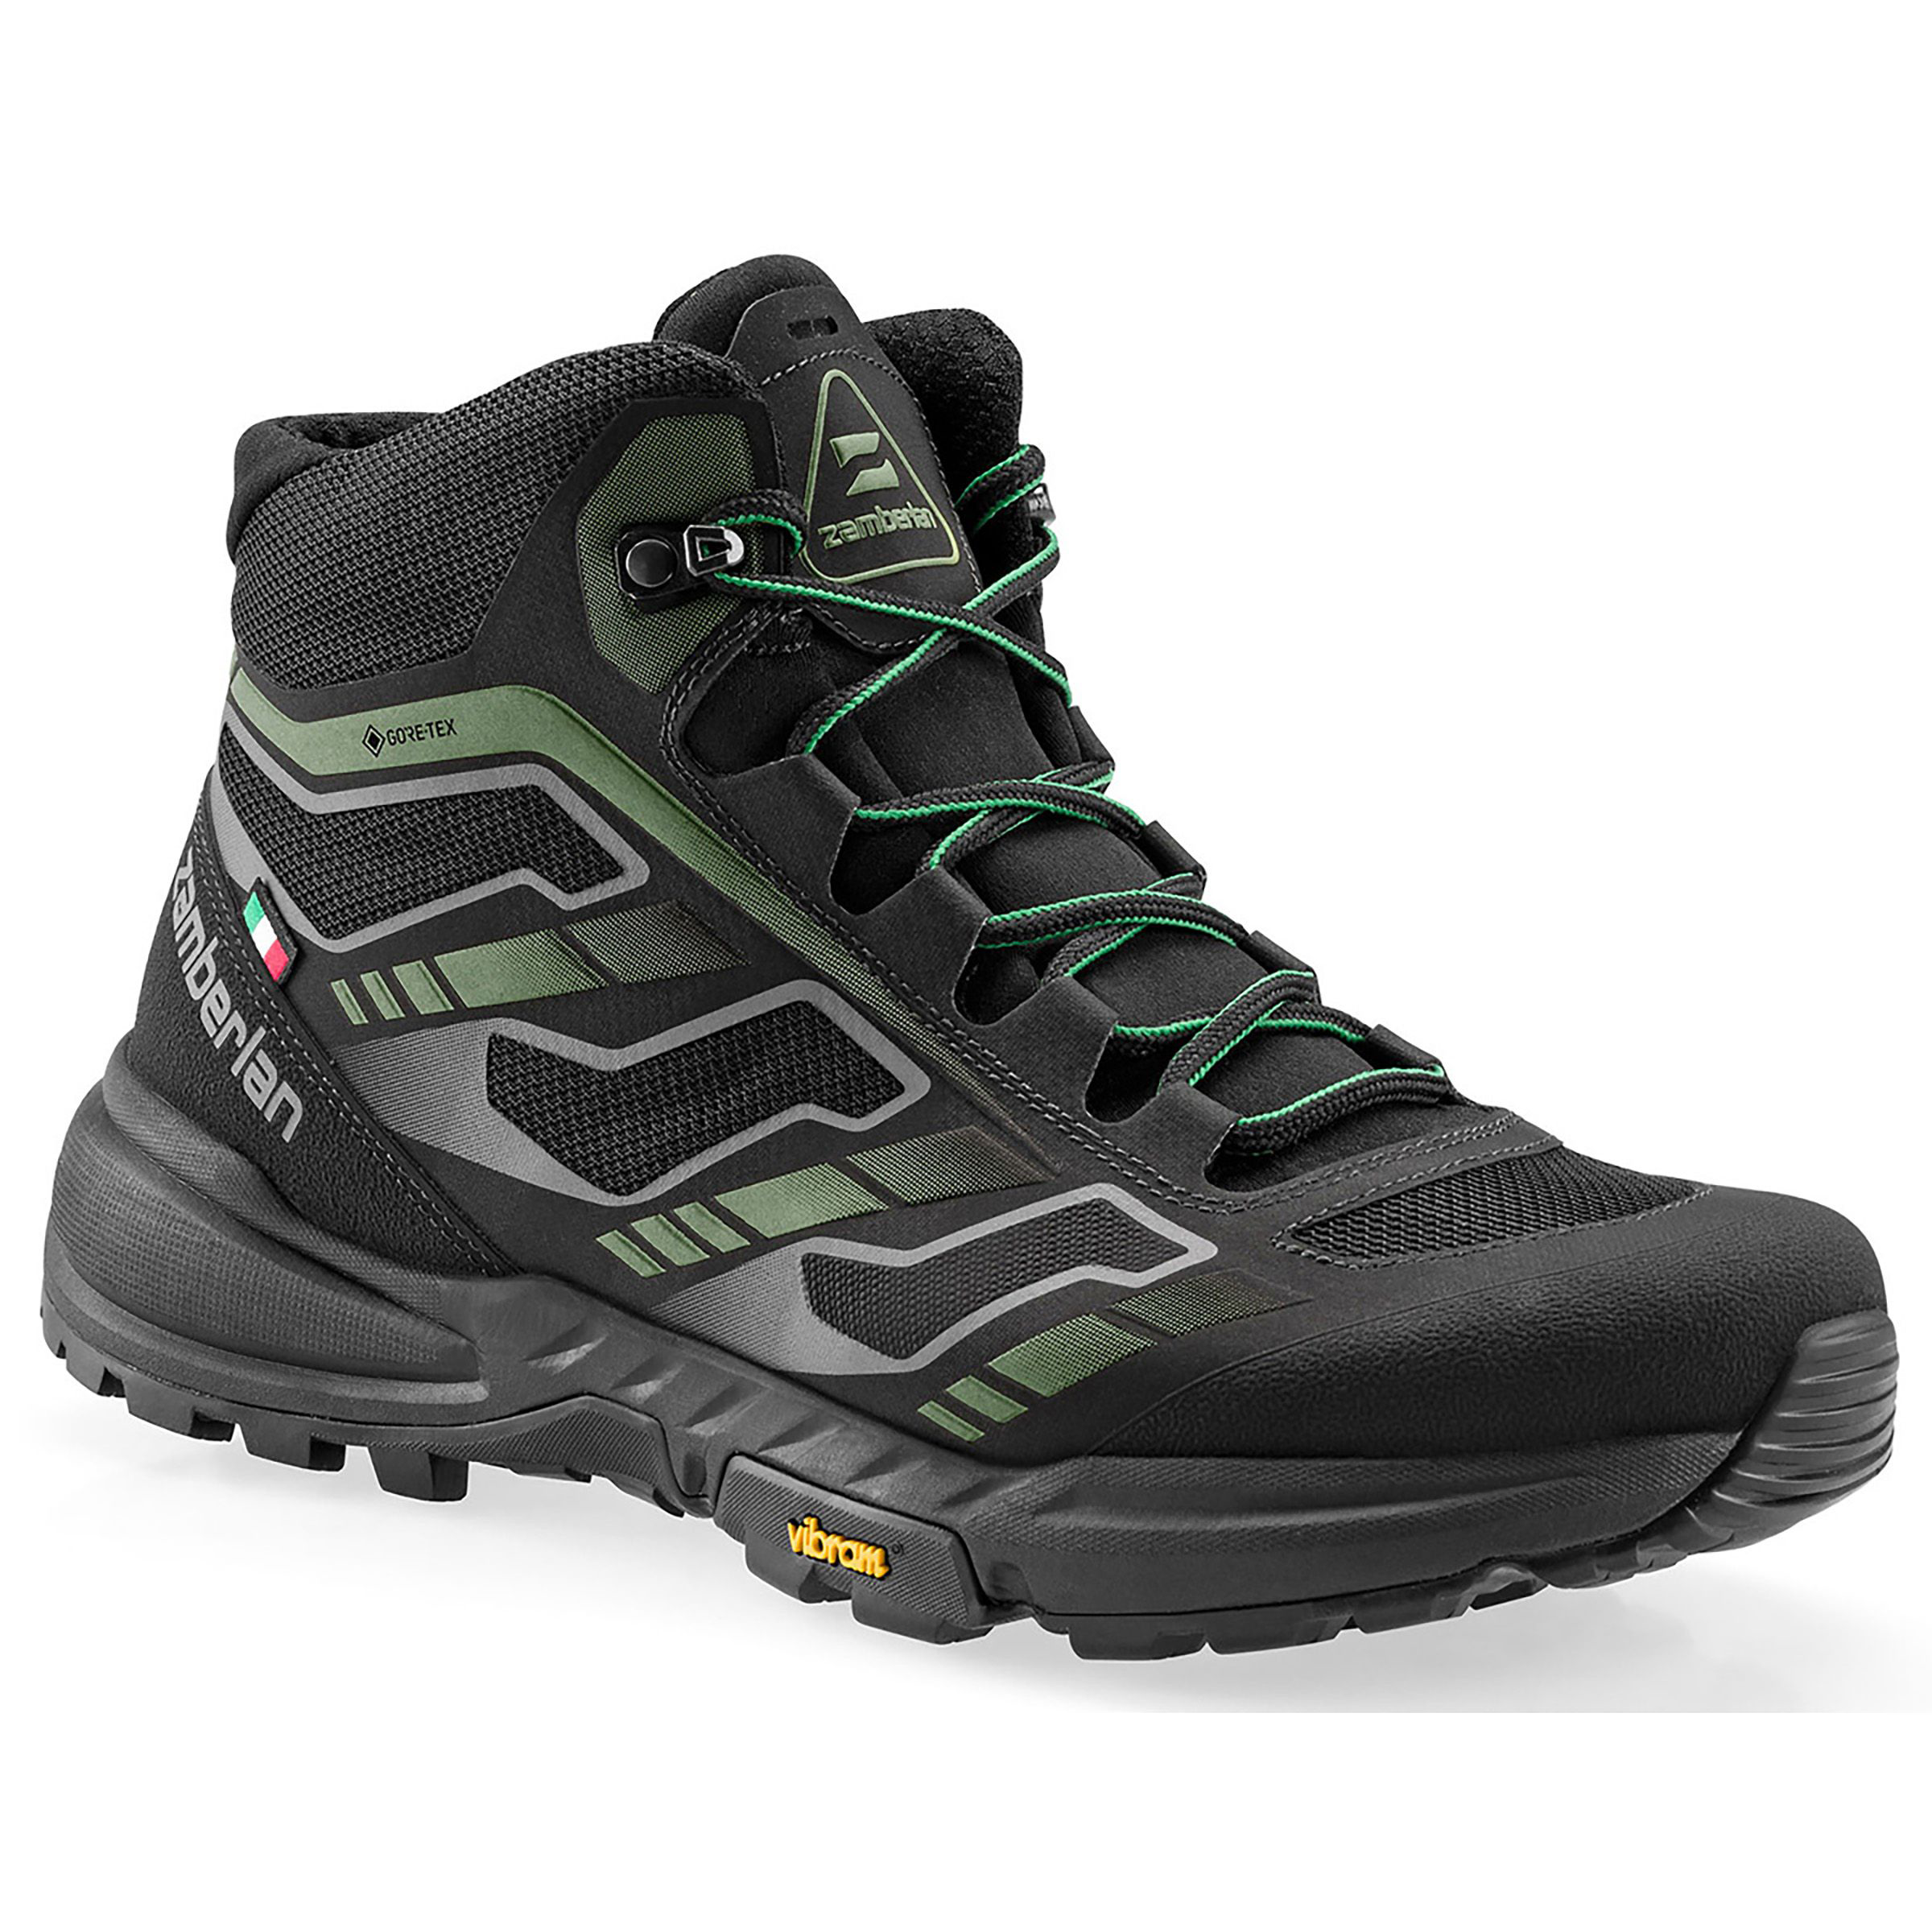 Zamberlan 219 Anabasis GTX Waterproof Mid Hiking Boots for Men - Dark Green - 11.5M